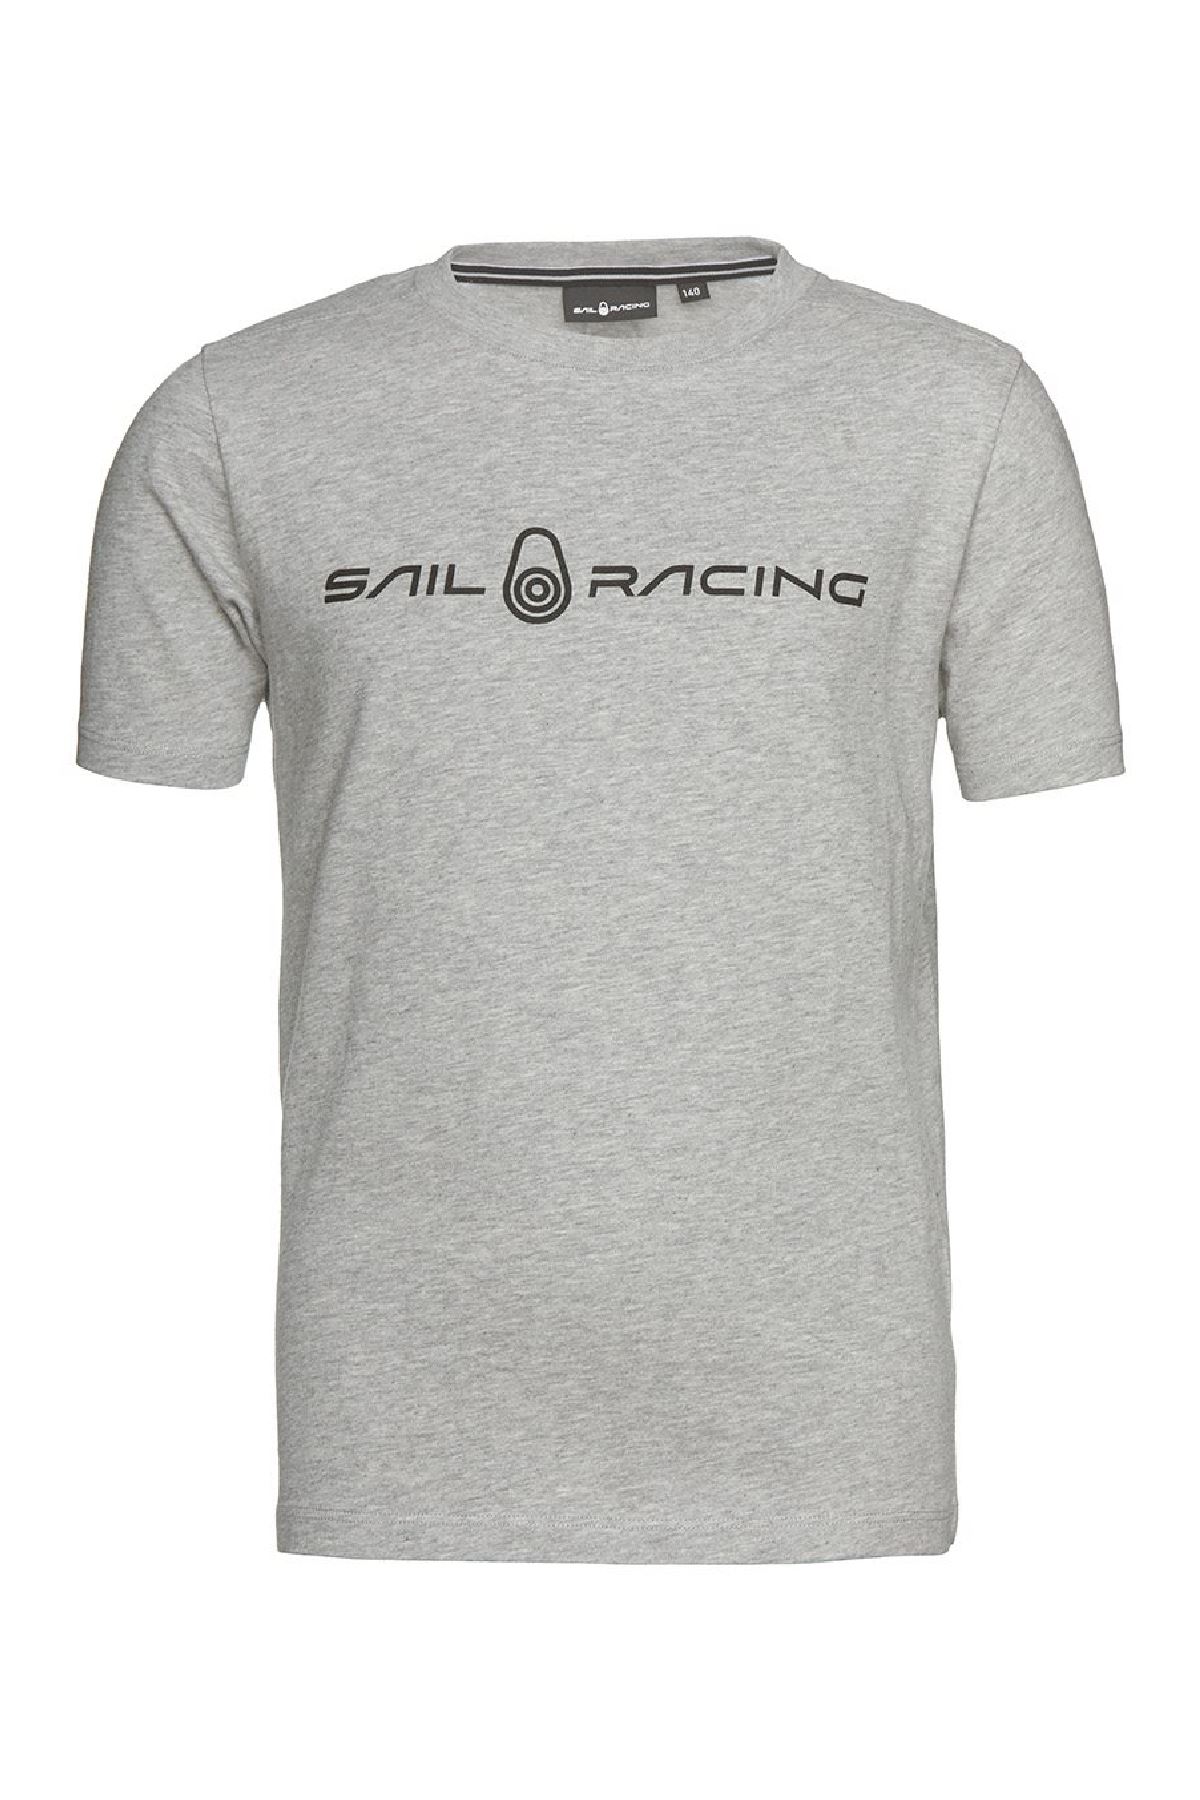 Sail Racing Jr Bowman Tee Gri Erkek Çocuk Tişört 